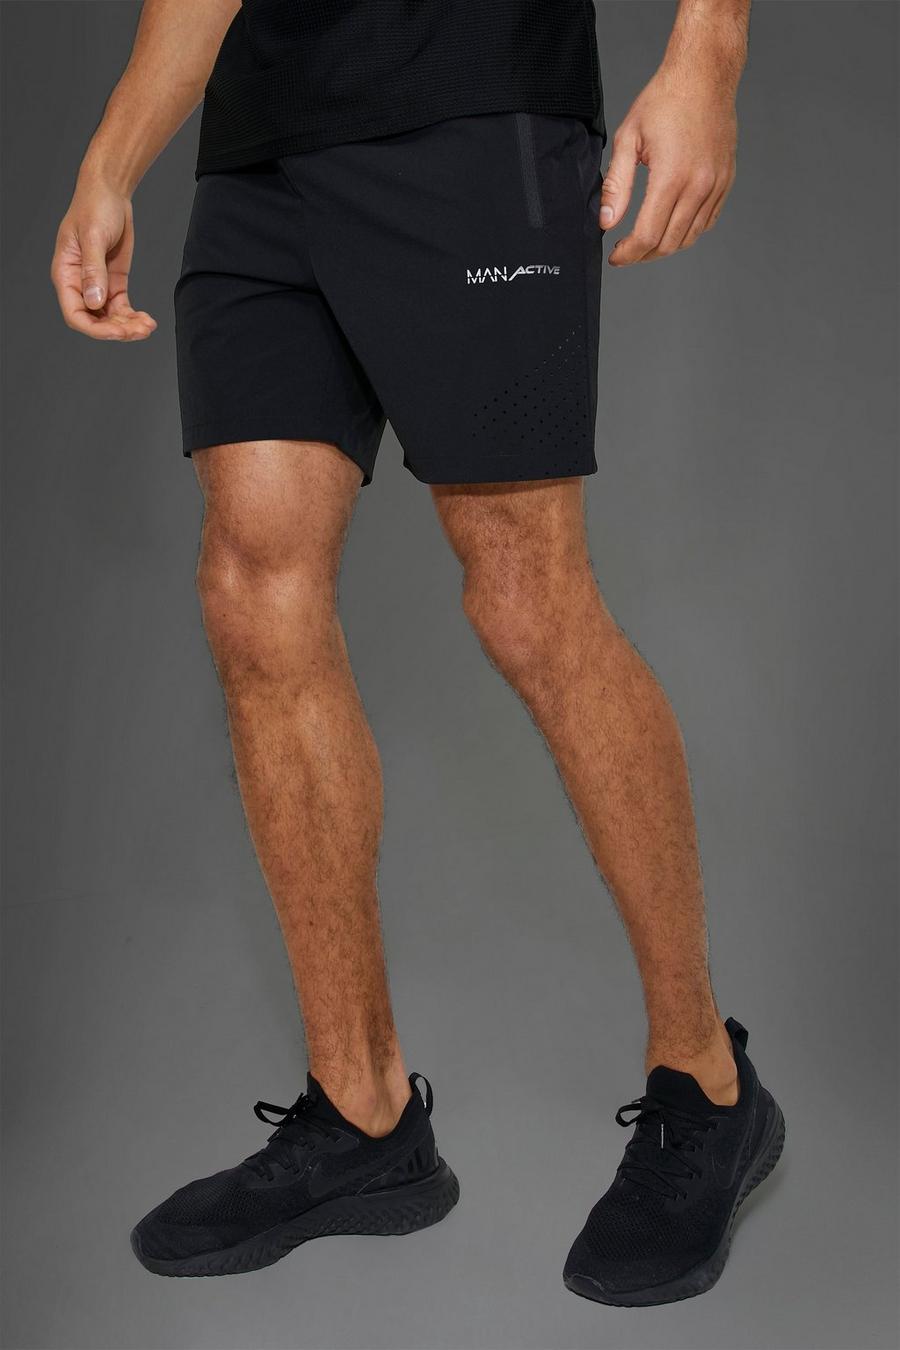 Pantaloncini Man Active Gym in nylon traforato, Black nero